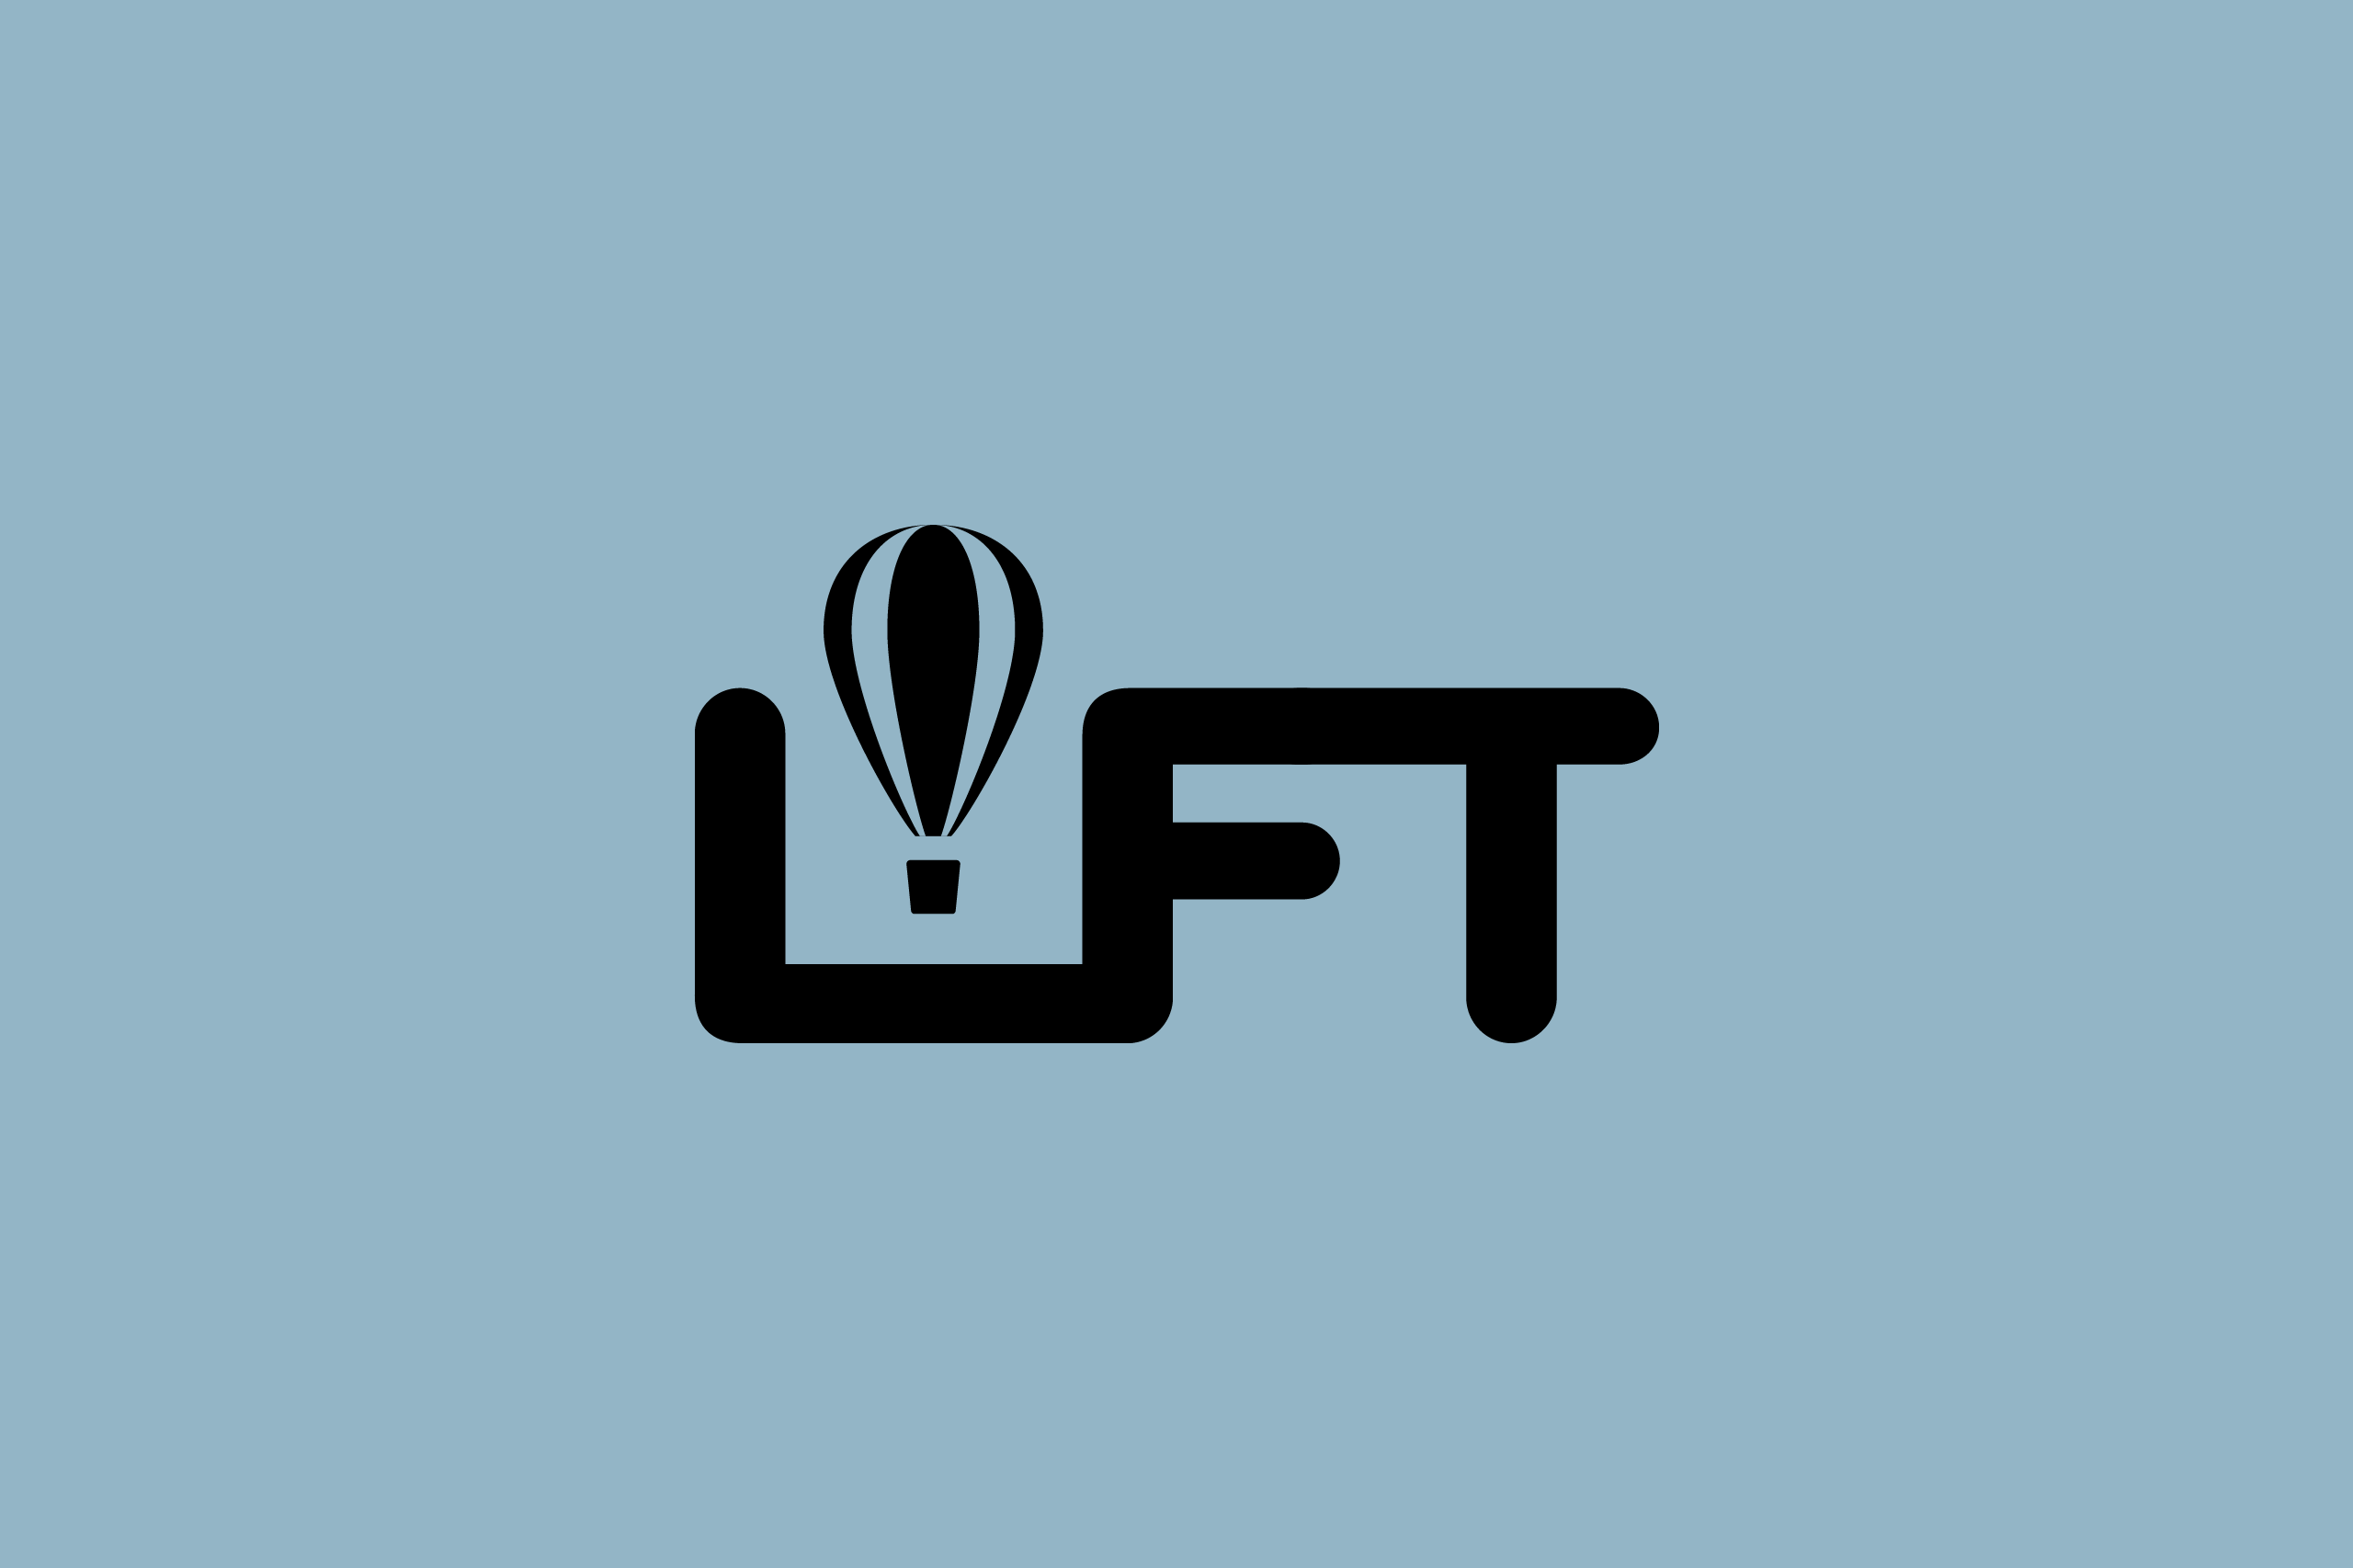 Lift Logo - Day 2 | Xavier Wendling